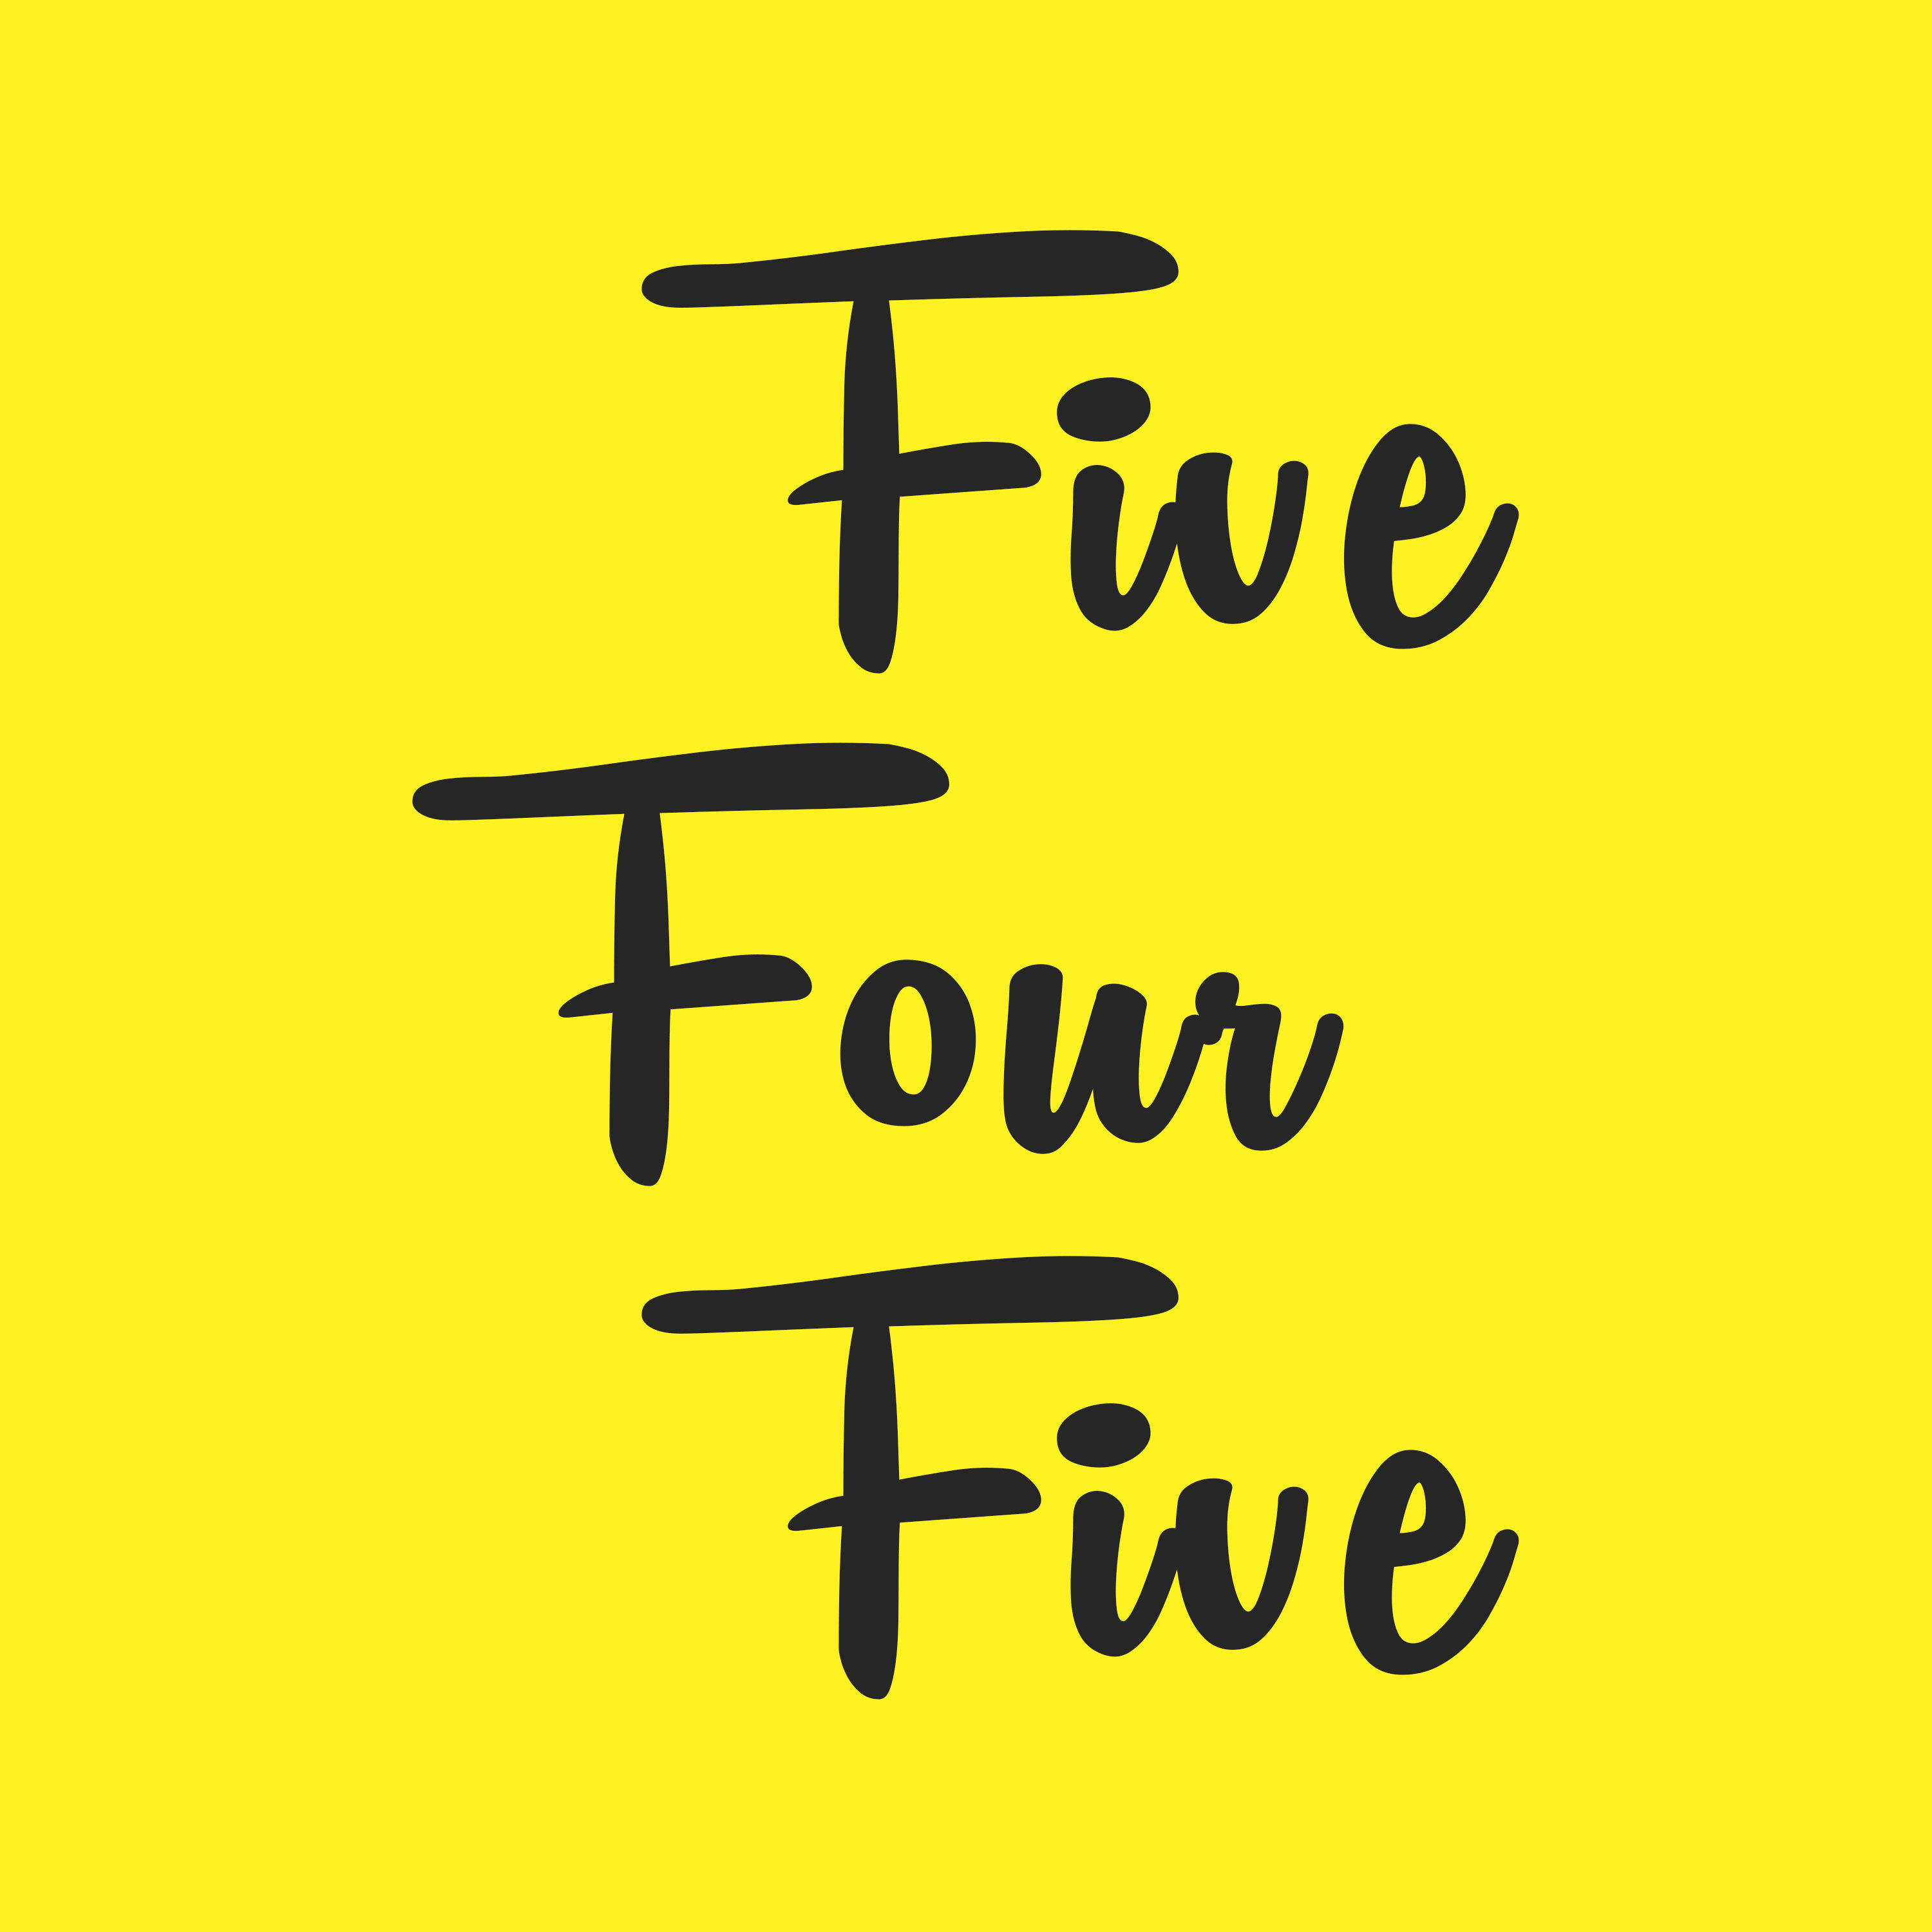 Five Four Five